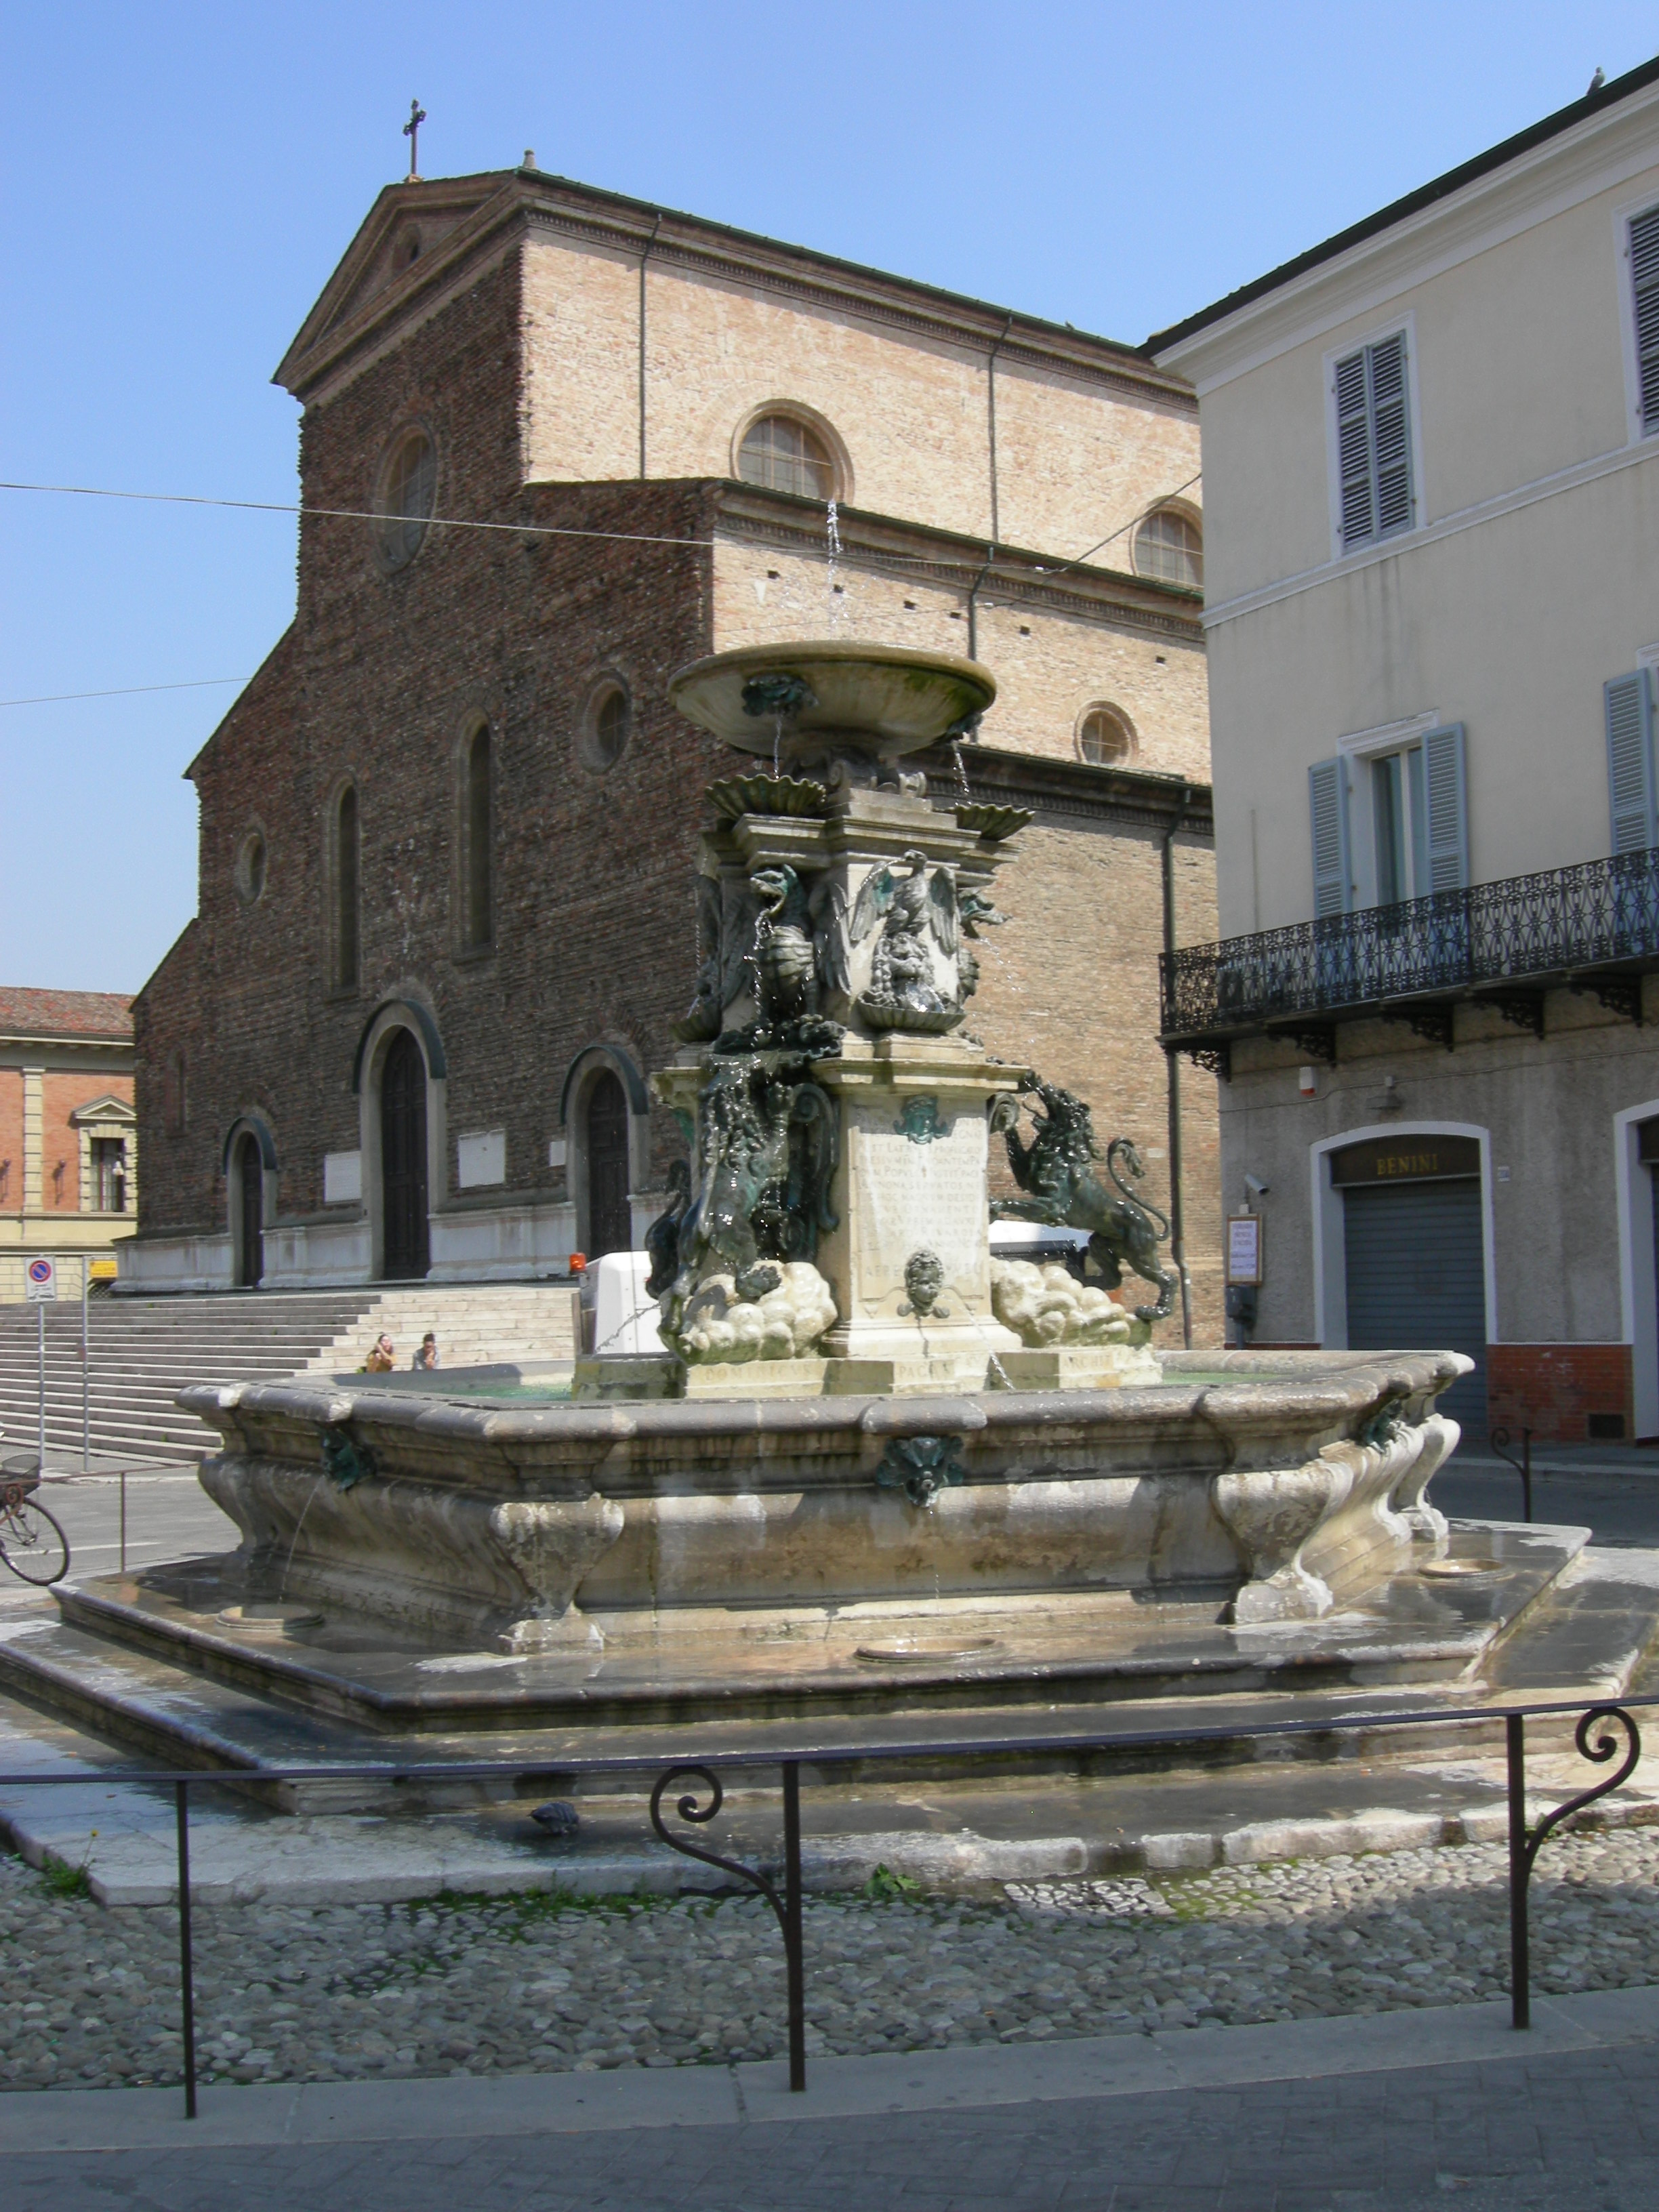 foto: https://upload.wikimedia.org/wikipedia/commons/0/05/Fontana_Monumentale_-_Cattedrale_%28Faenza%29.jpg